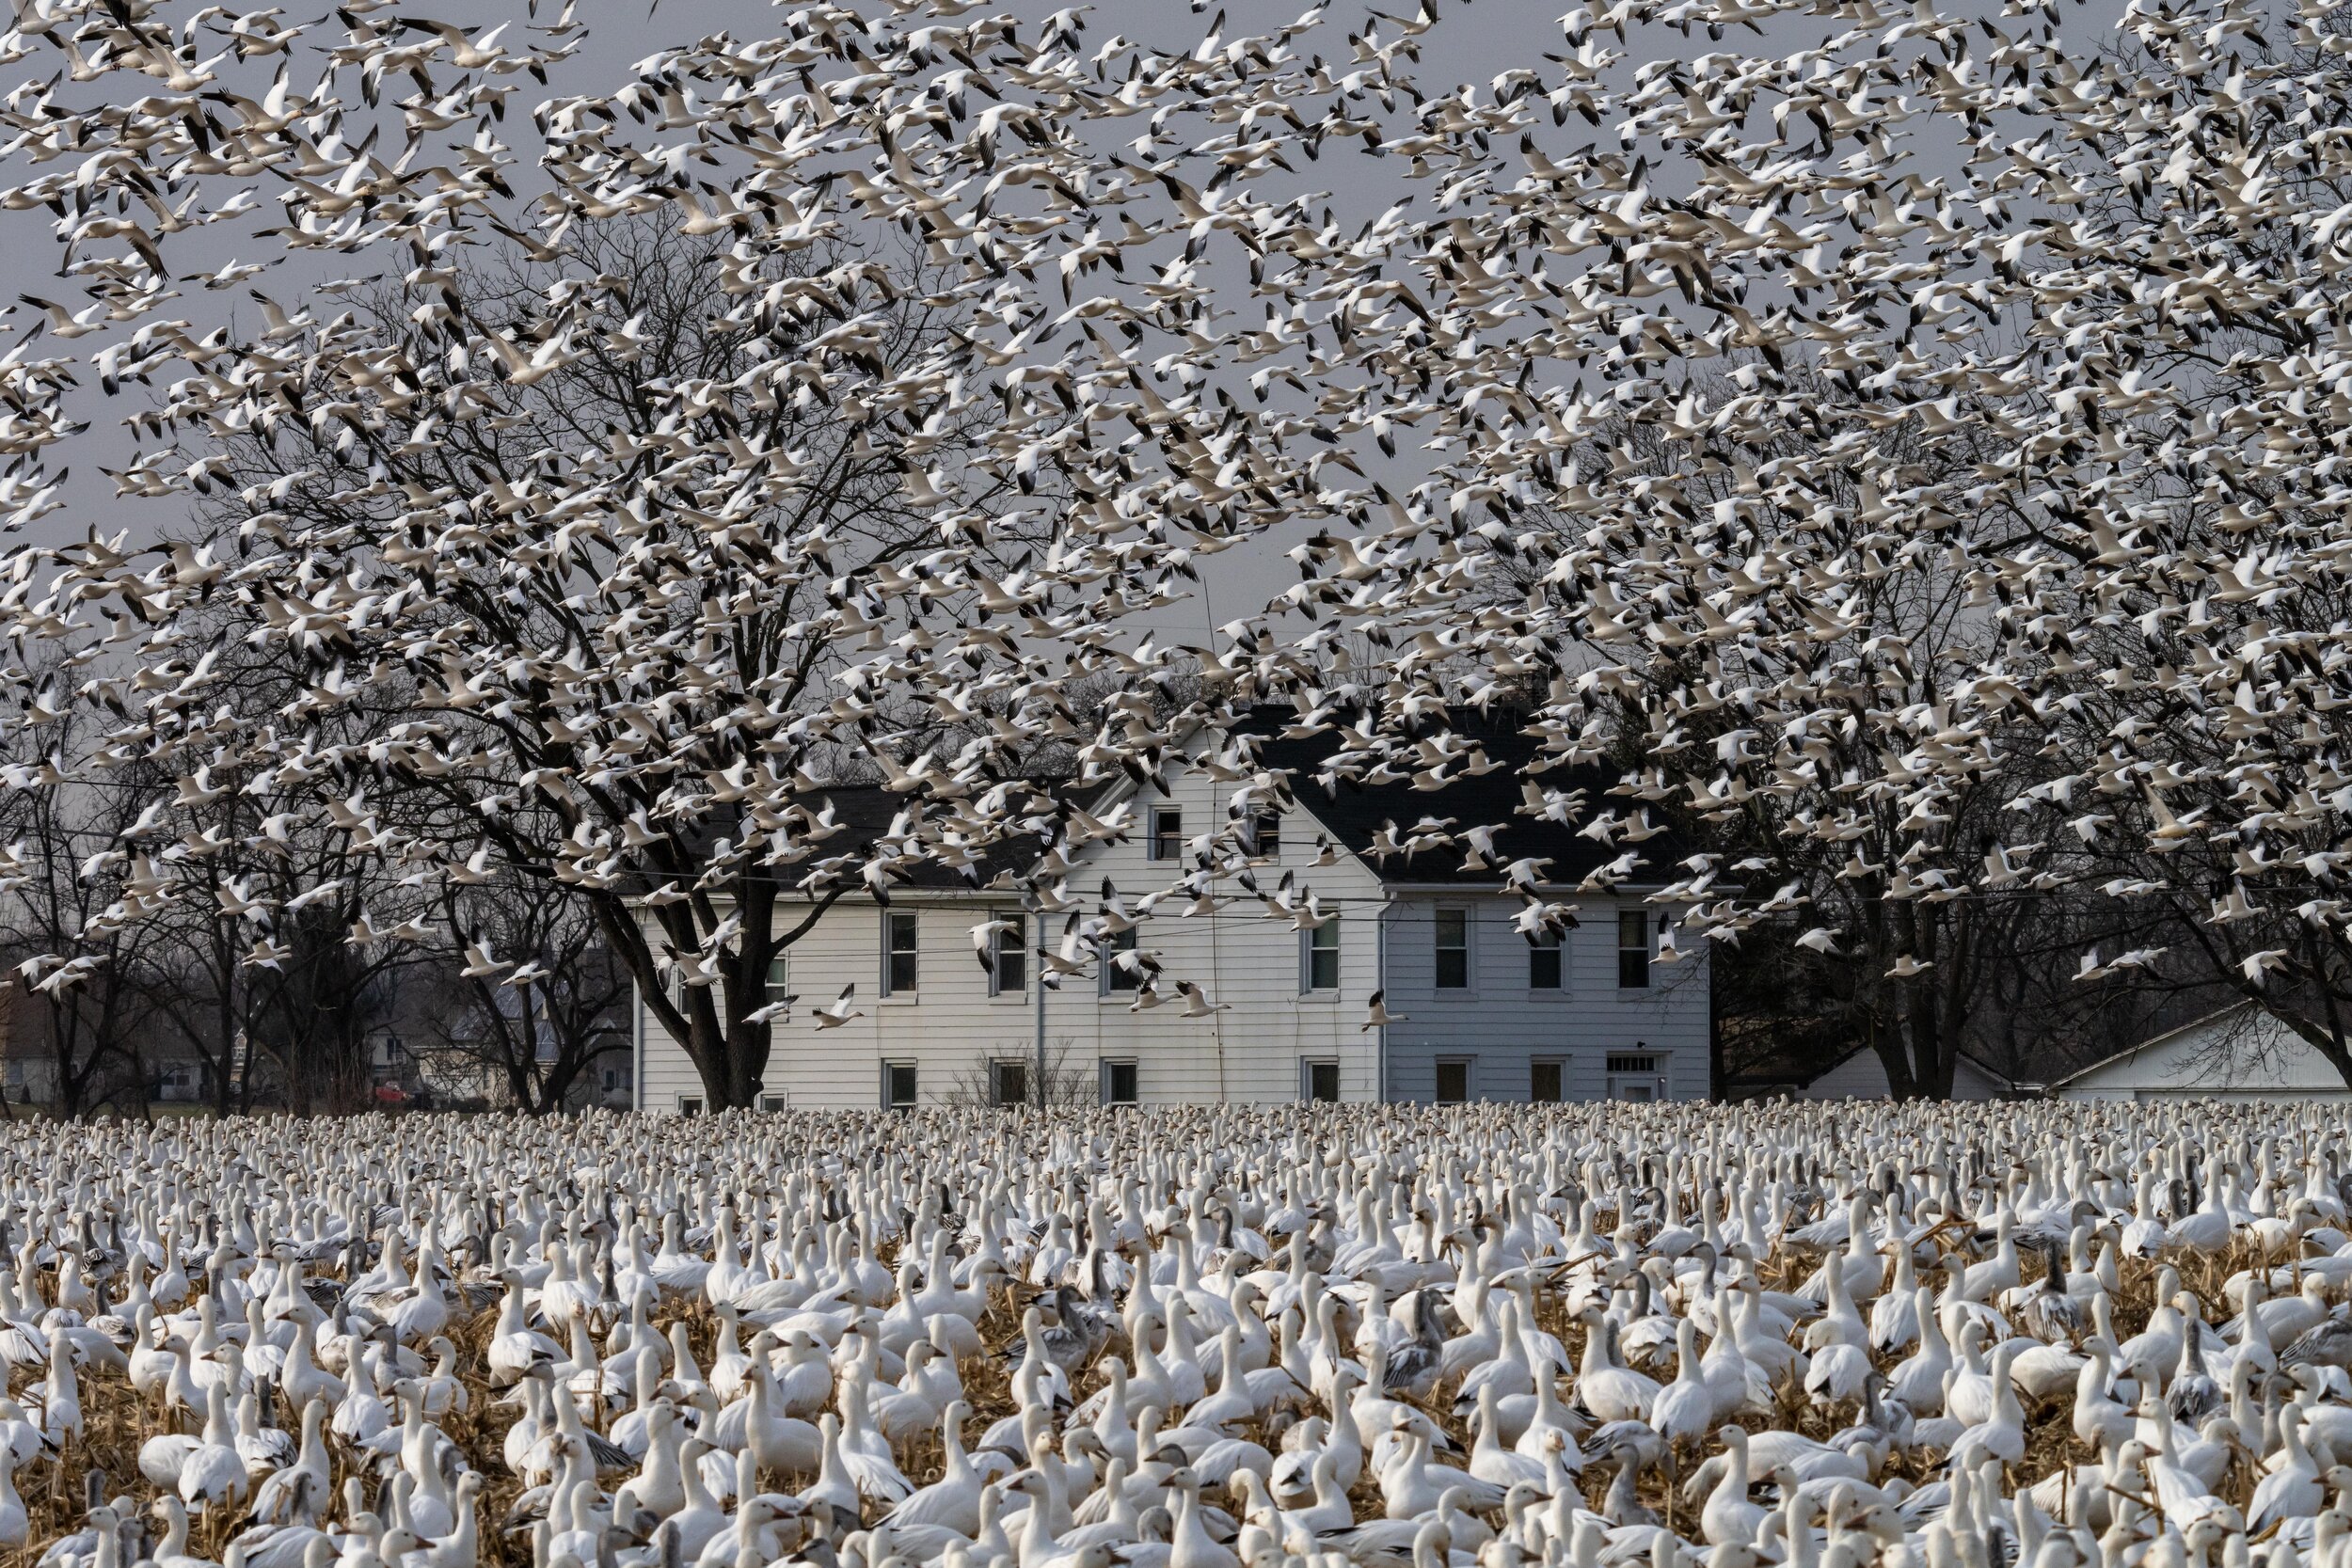 Snow Geese in Pennsylvania